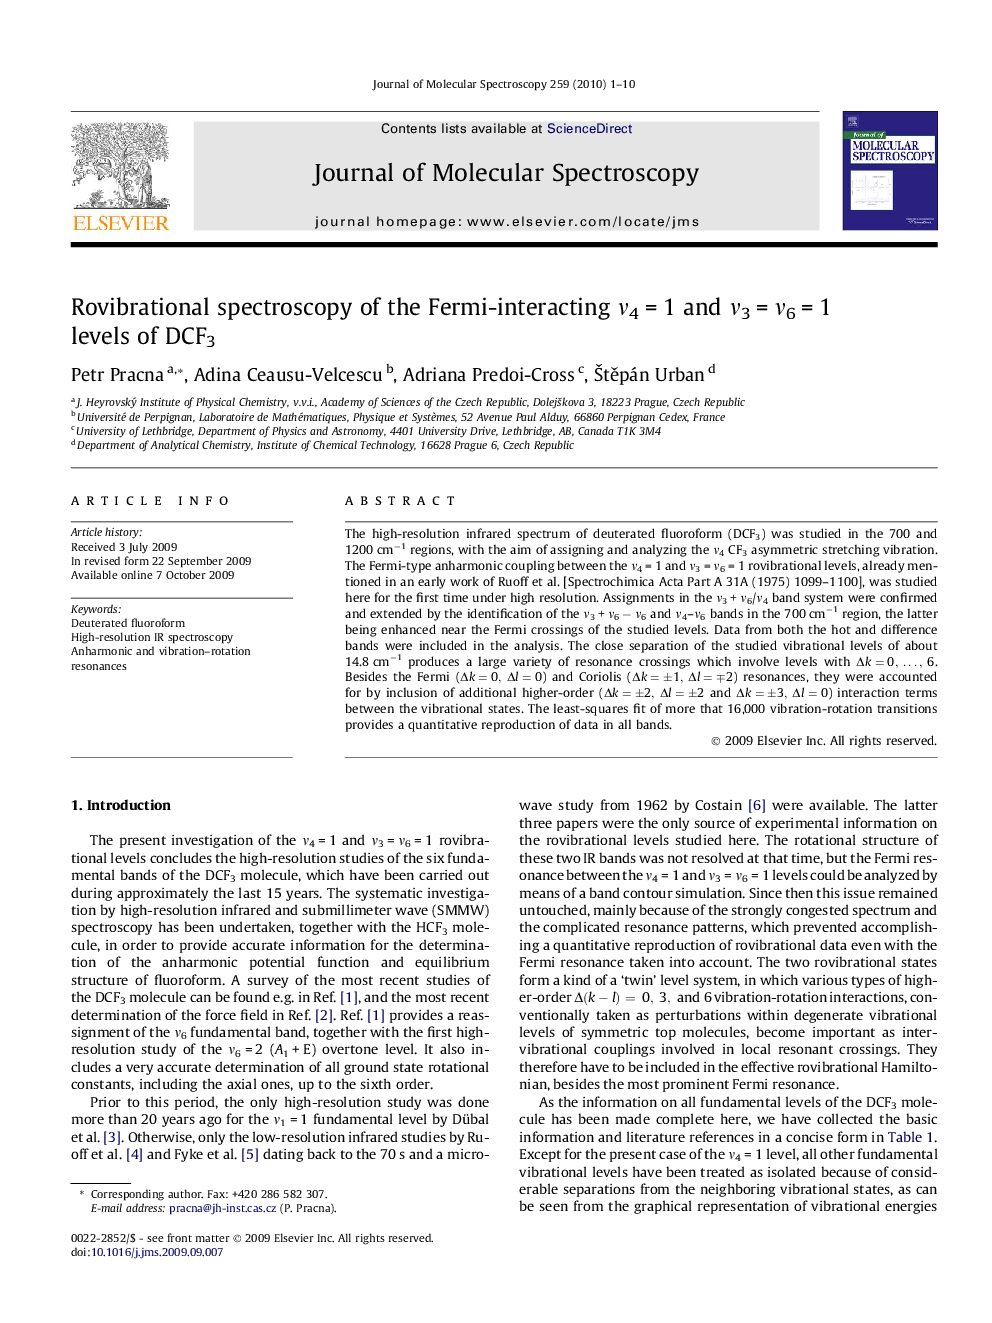 Rovibrational spectroscopy of the Fermi-interacting Î½4Â =Â 1 and Î½3Â =Â Î½6Â =Â 1 levels of DCF3